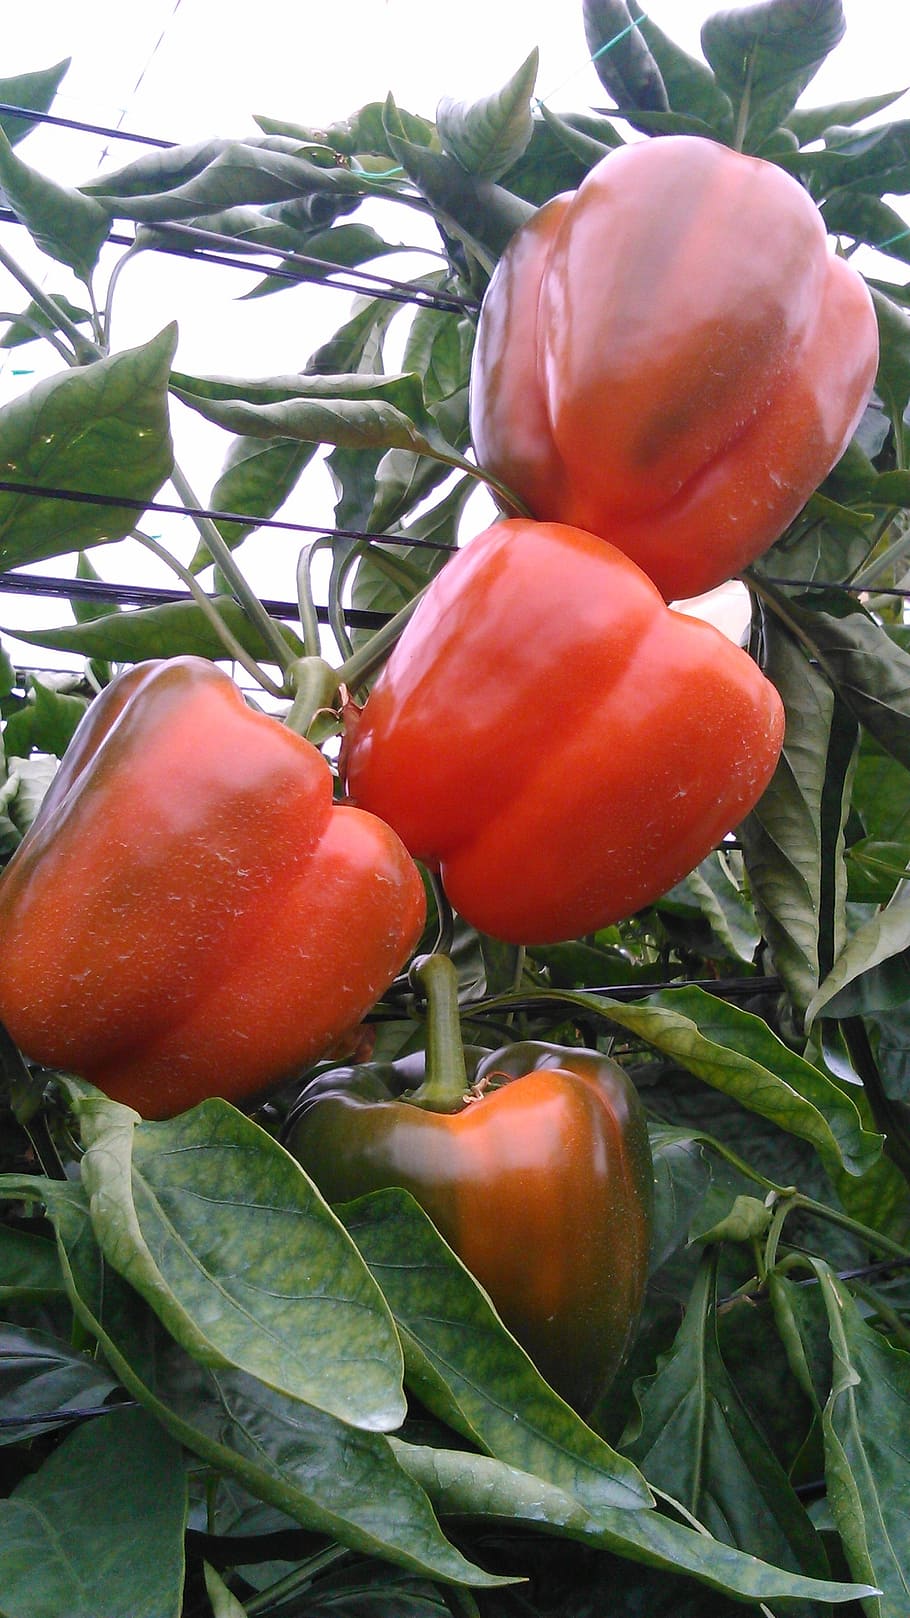 sweet pepper, greenhouse, almería, pepper, agriculture, vegetable, farming, crop, capsicum, produce